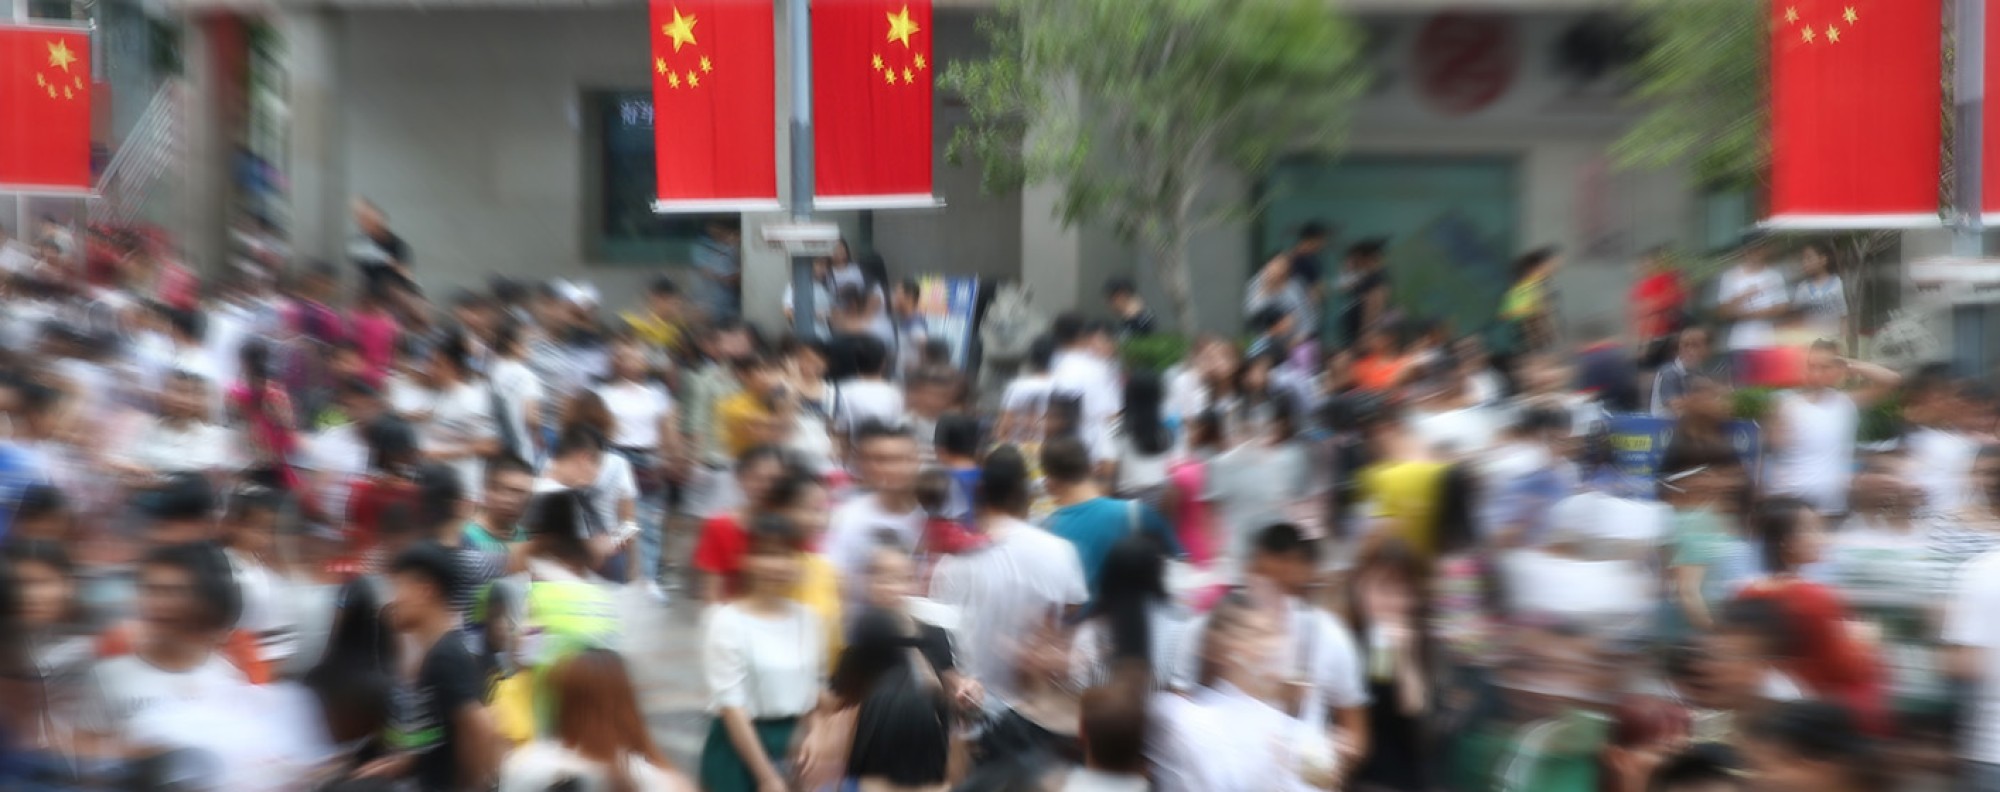 Crowds in Shenzhen, China. Photo: Shutterstock